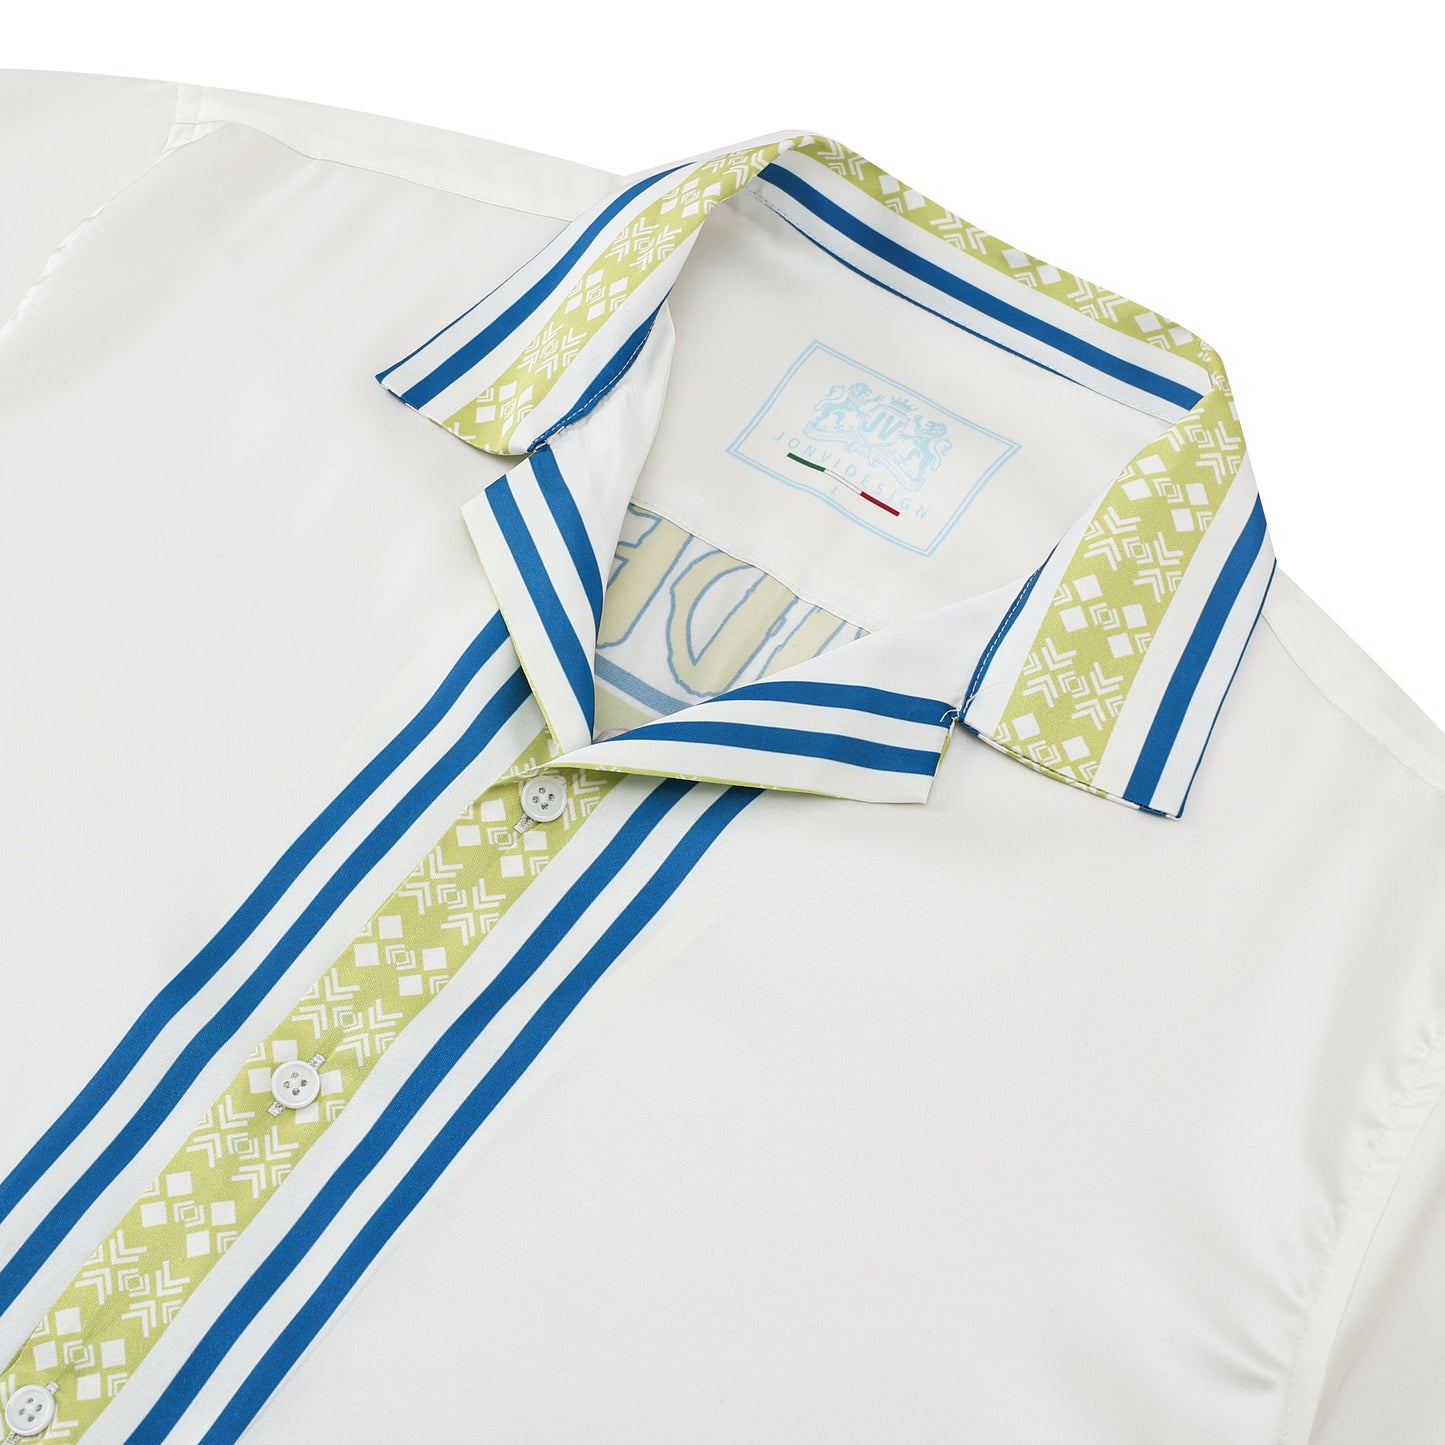 Grand Palace Pattern Short Sleeve Camp Collar Shirt